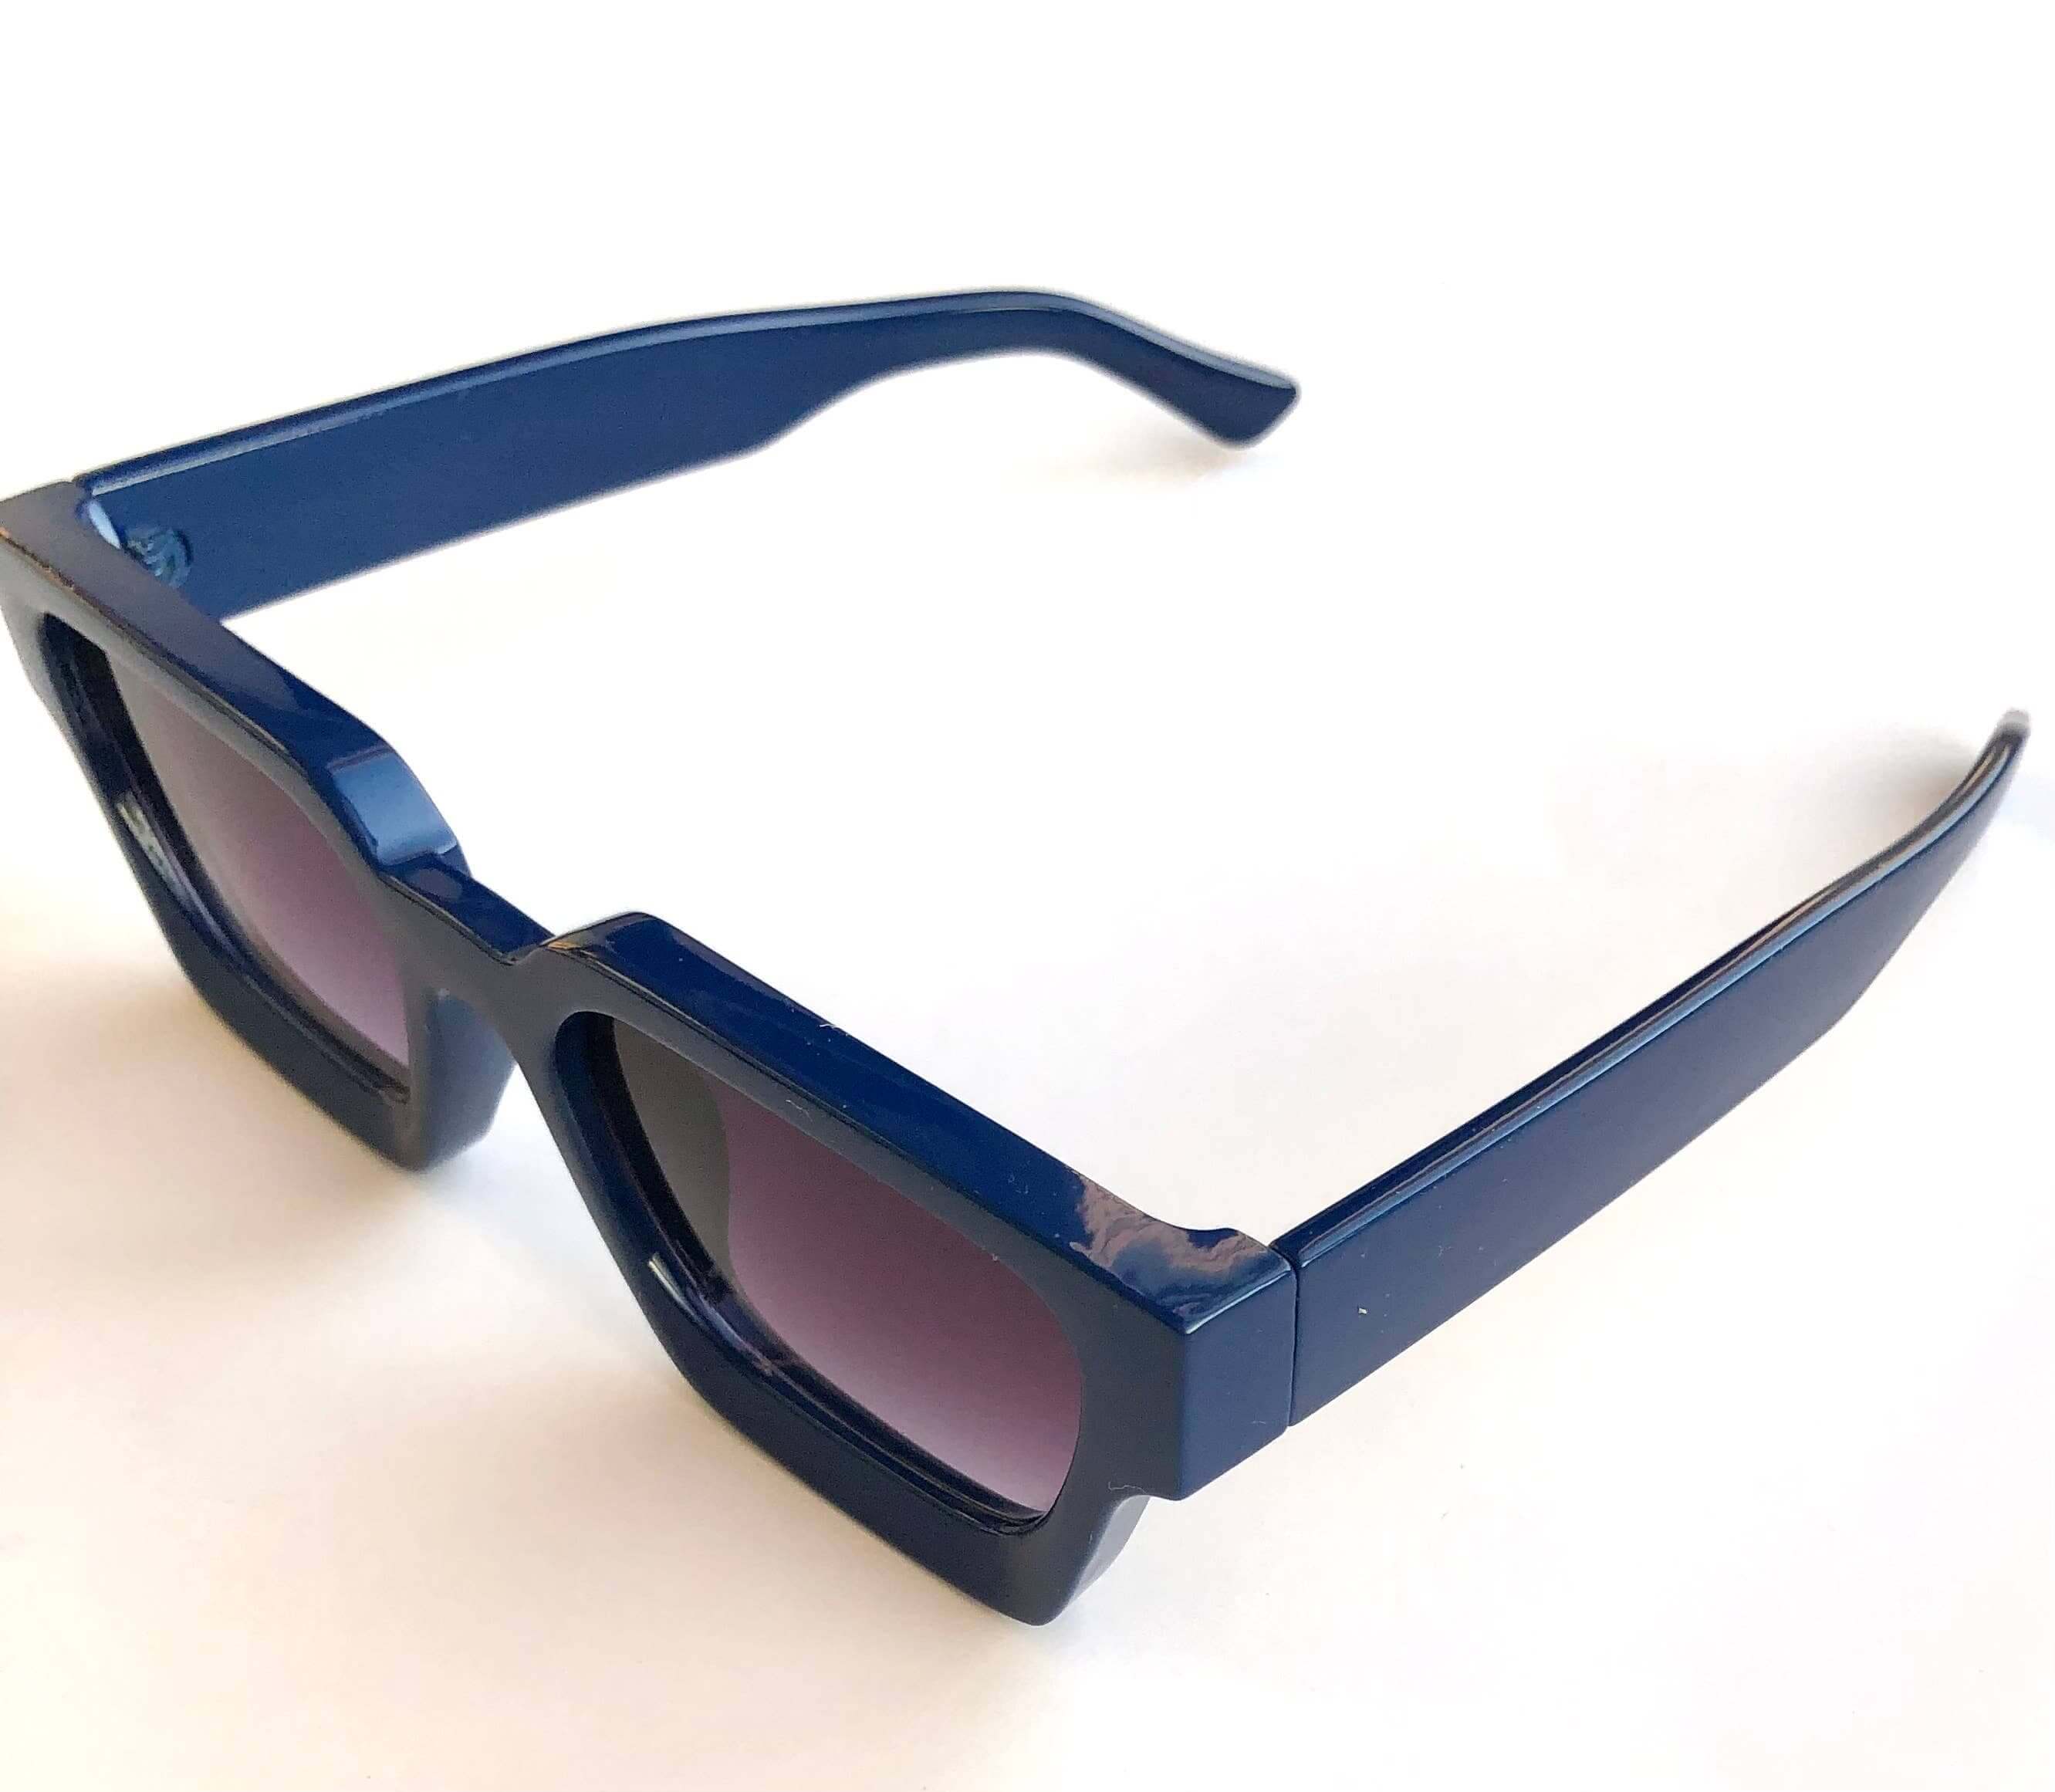 iconic mi Adult sunglasses rectangle chunky frame: Navy